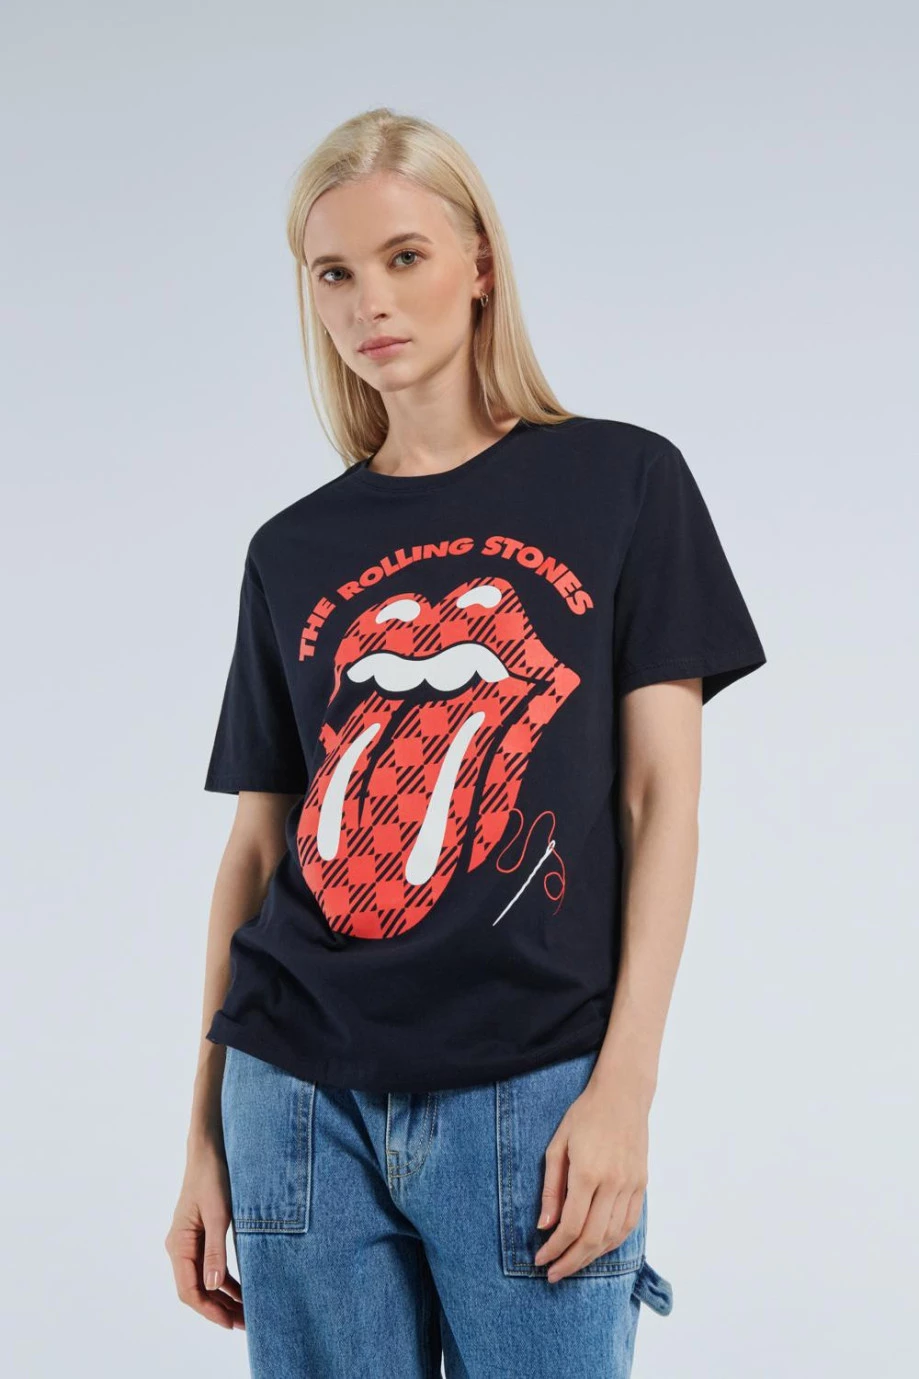 Camiseta femenina hombro rodado manga corta con estampado en frente de Rolling Stones